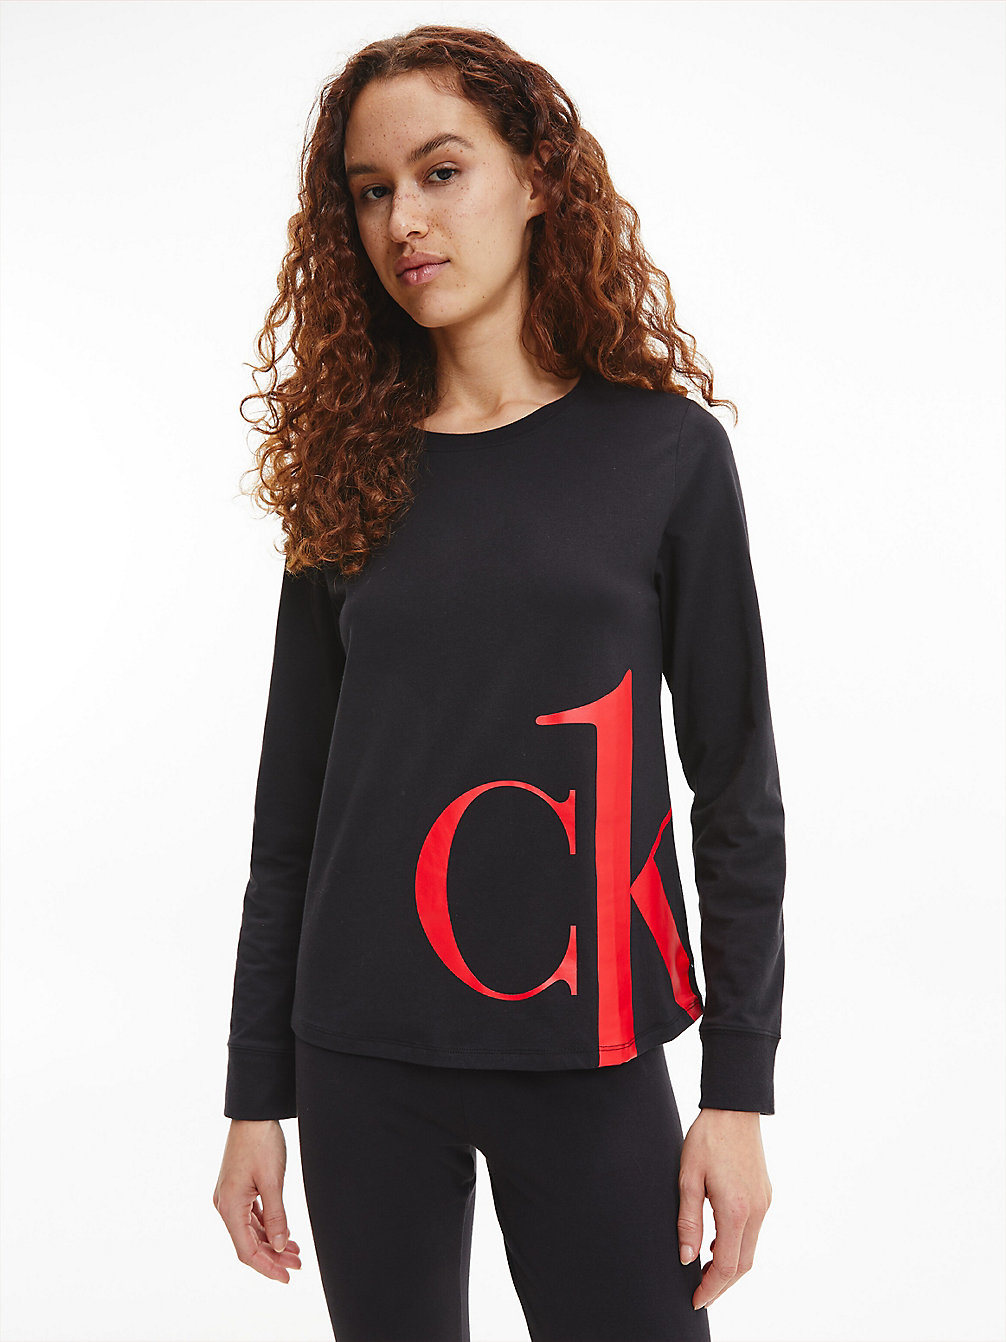 BLACK_EXACT LOGO Pyjama-Top – CK One undefined Damen Calvin Klein